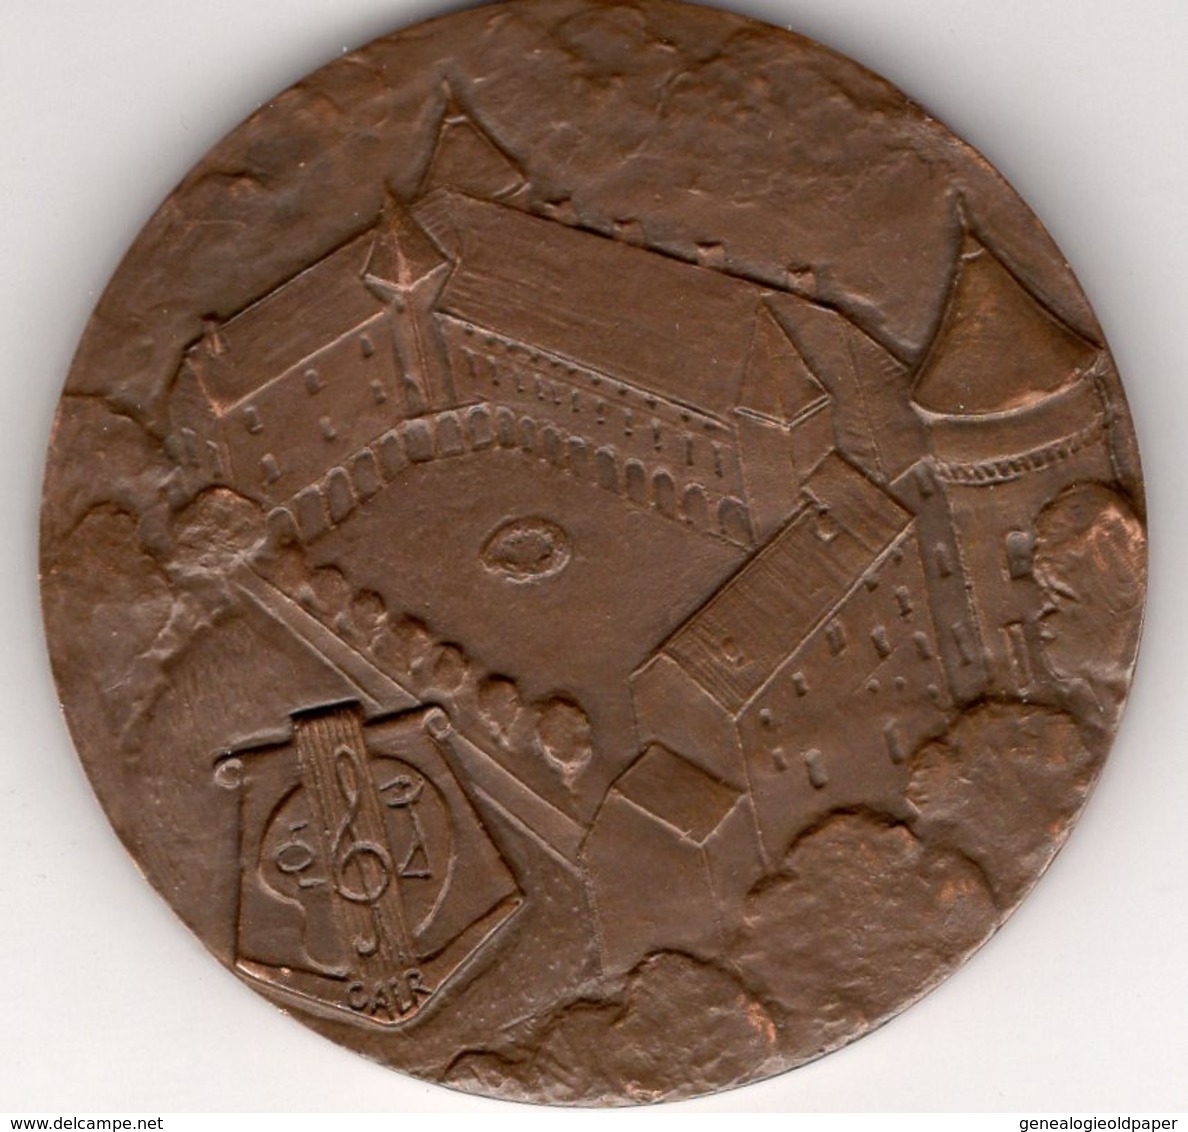 87 - ROCHECHOUART - RARE GRANDE MEDAILLE DE TABLE EN BRONZE ROCHECHOUART EN LIMOUSIN-CHATEAU-GRAVEUR QUEROLLE - Bronzes